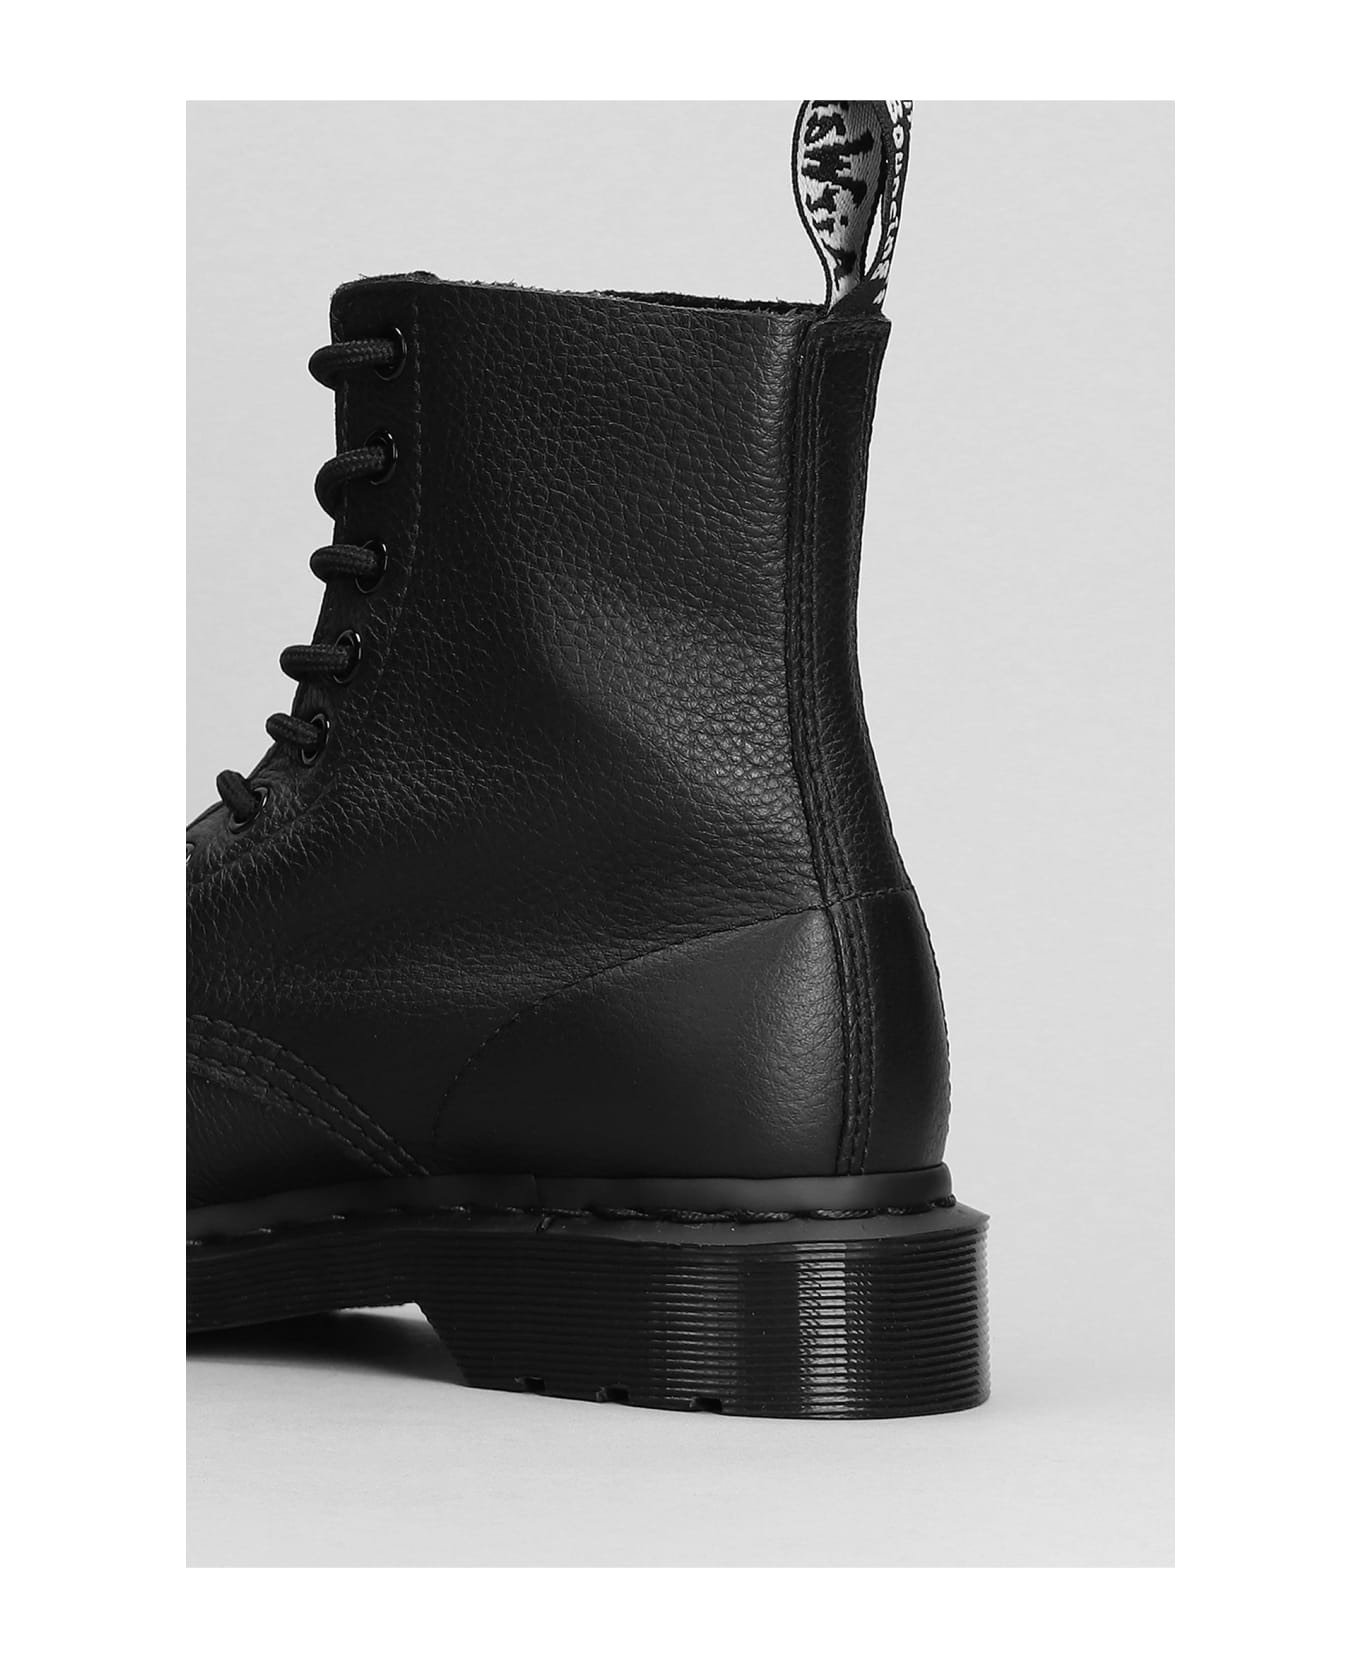 Dr. Martens 1460 Mono Combat Boots In Black Leather - BLACK VIRGINIA